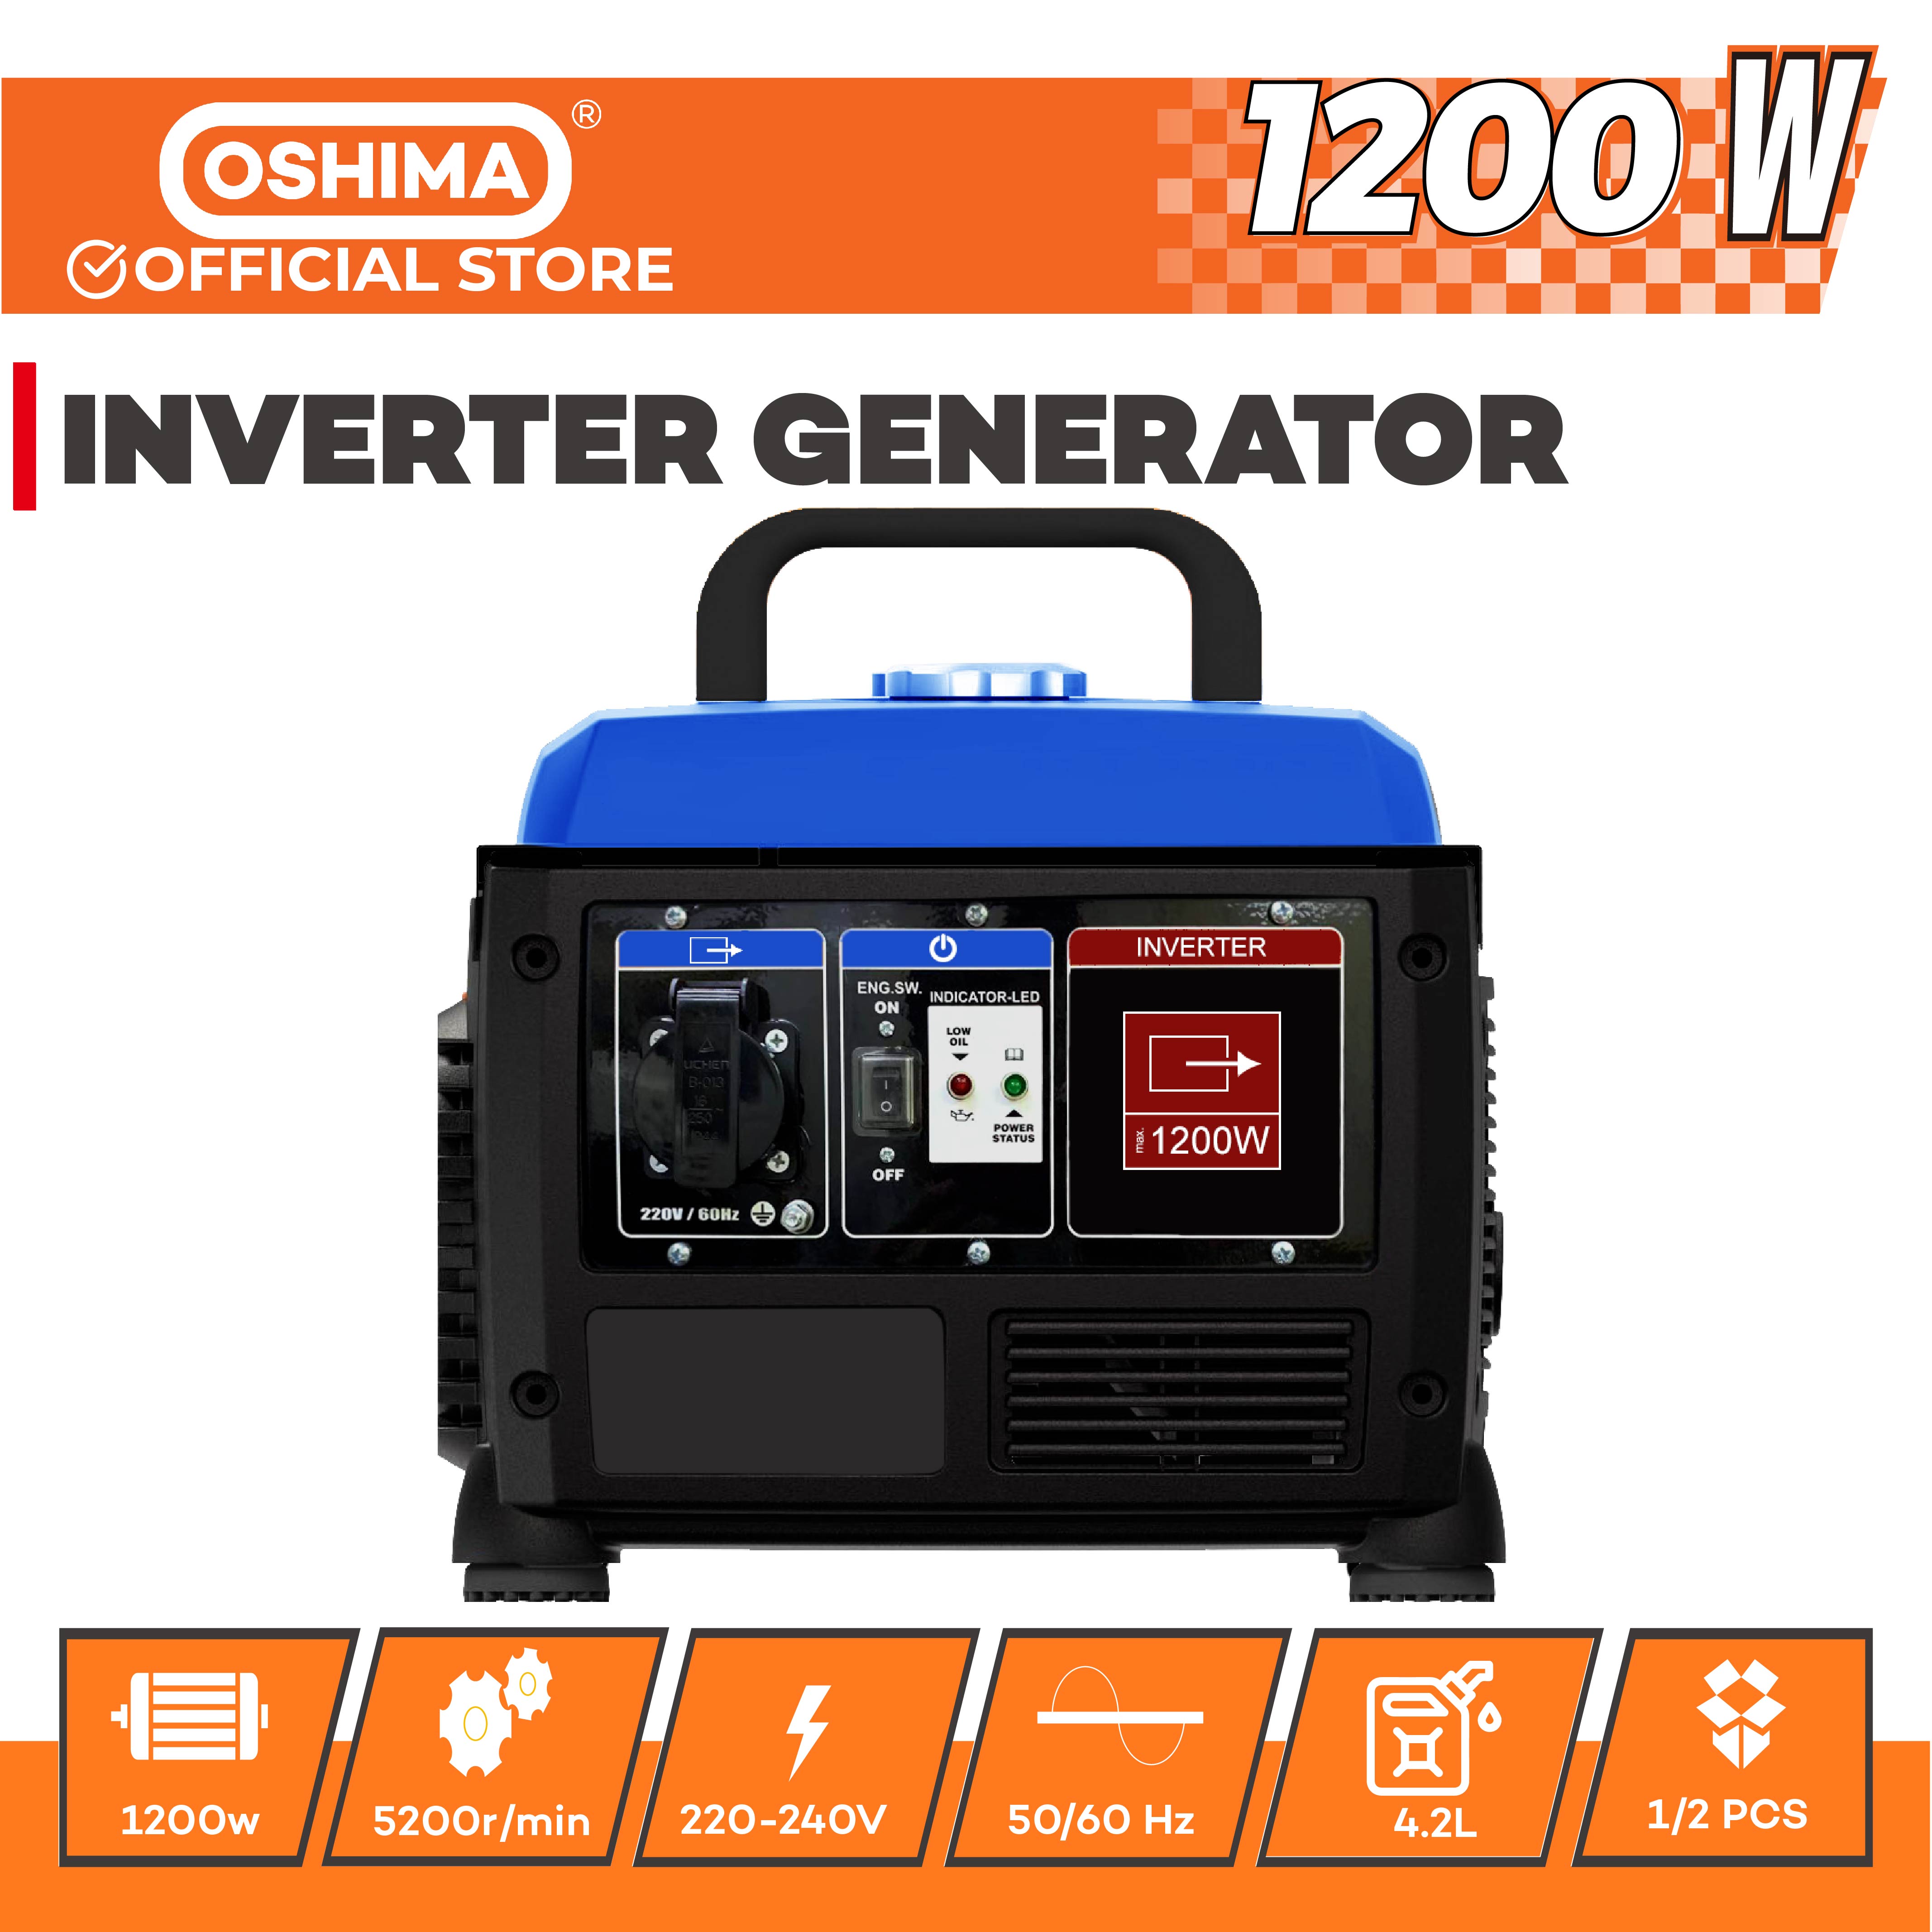 OSHIMA Portable Gasoline Generator, Max Output 3000W, Noise Level 69DB